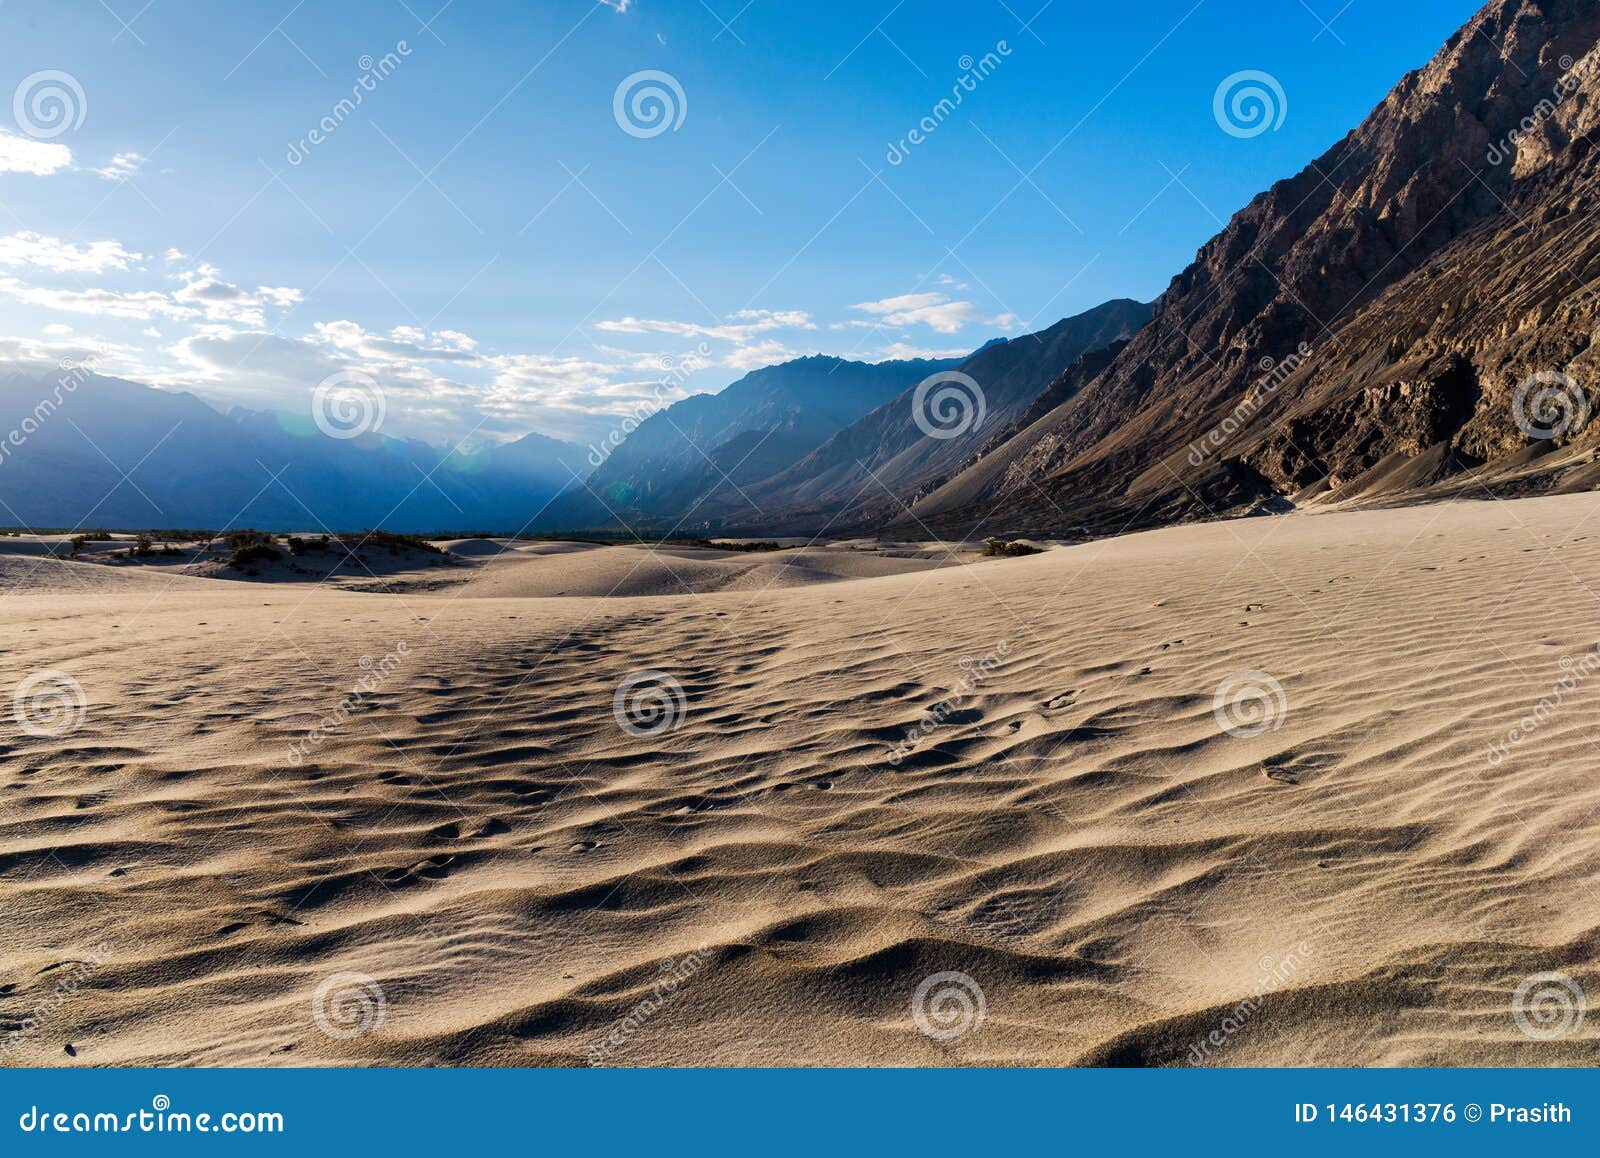 https://thumbs.dreamstime.com/z/desert-nubra-valley-leh-ladakh-jammu-kashmir-northern-india-focus-sand-dune-foreground-146431376.jpg